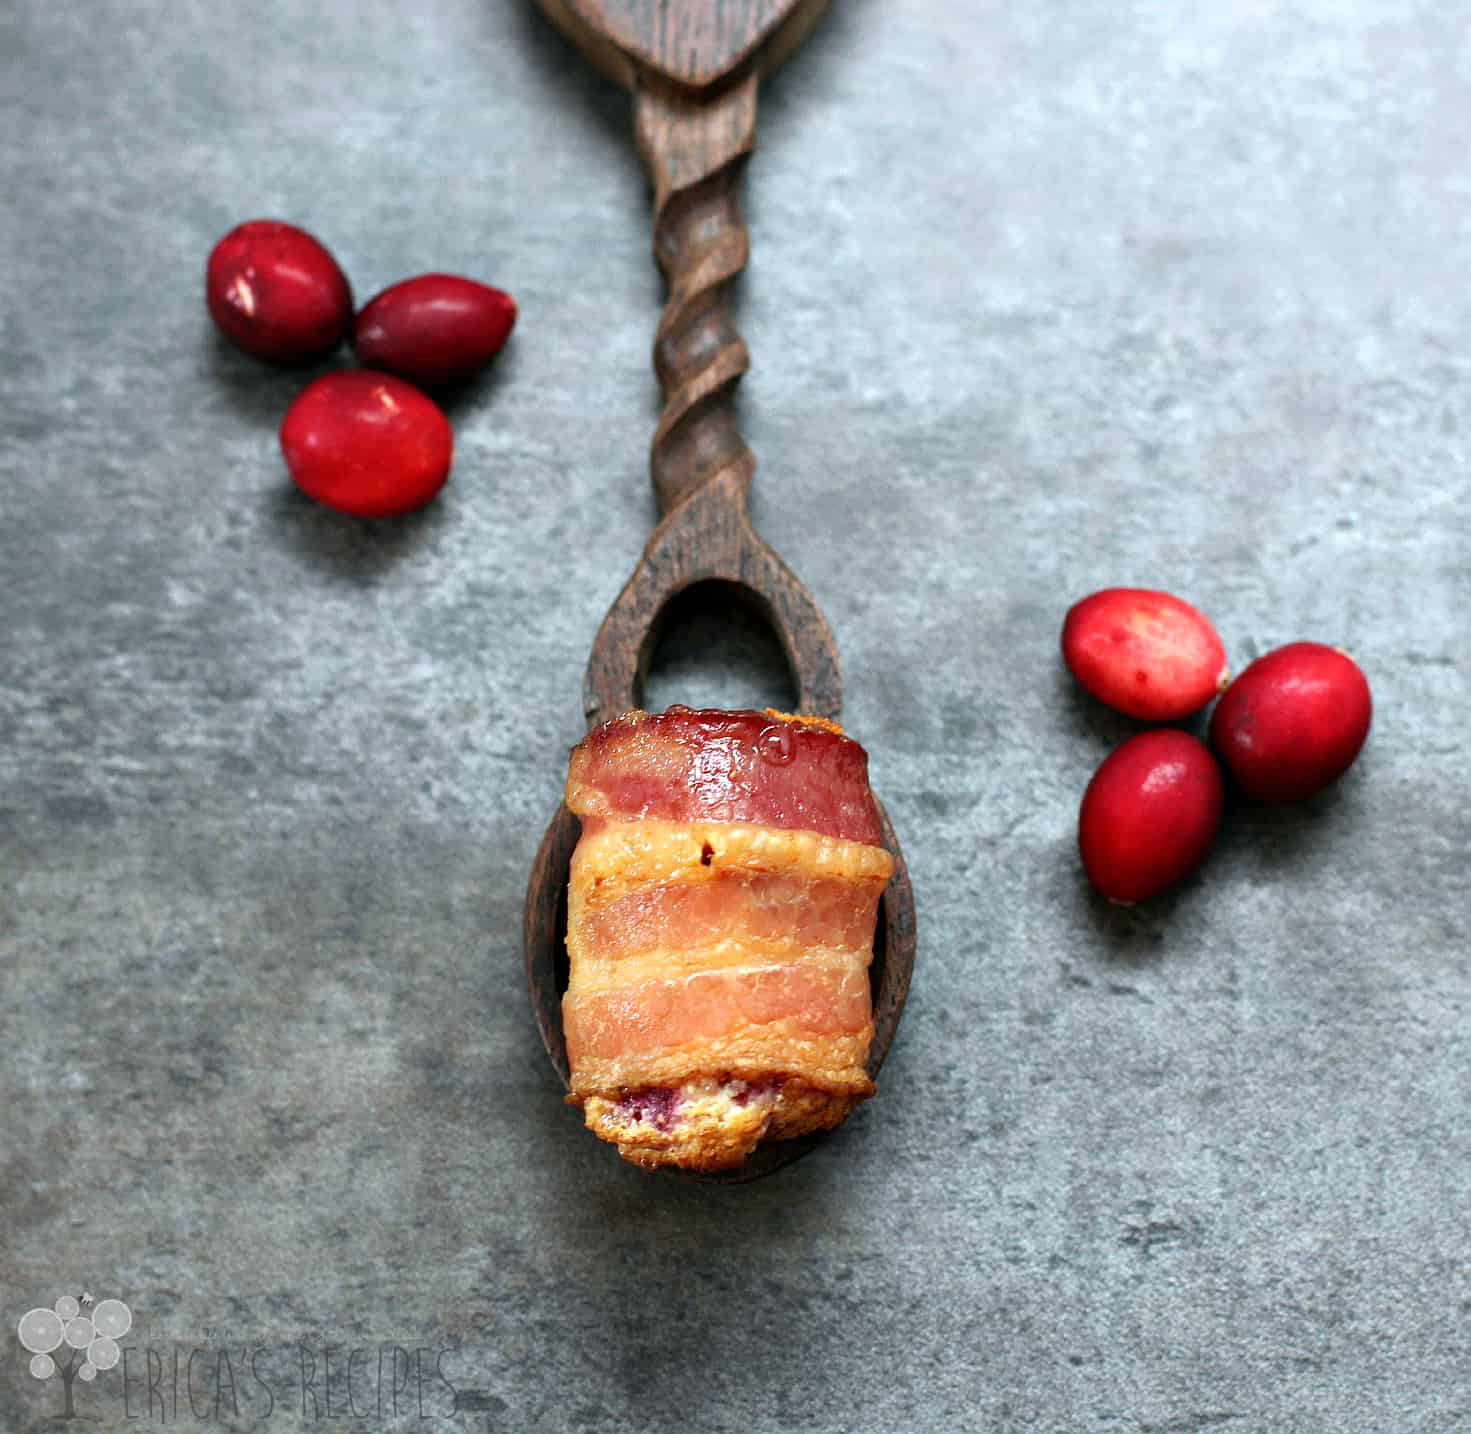 Cranberries ‘N Cream Bacon Bites